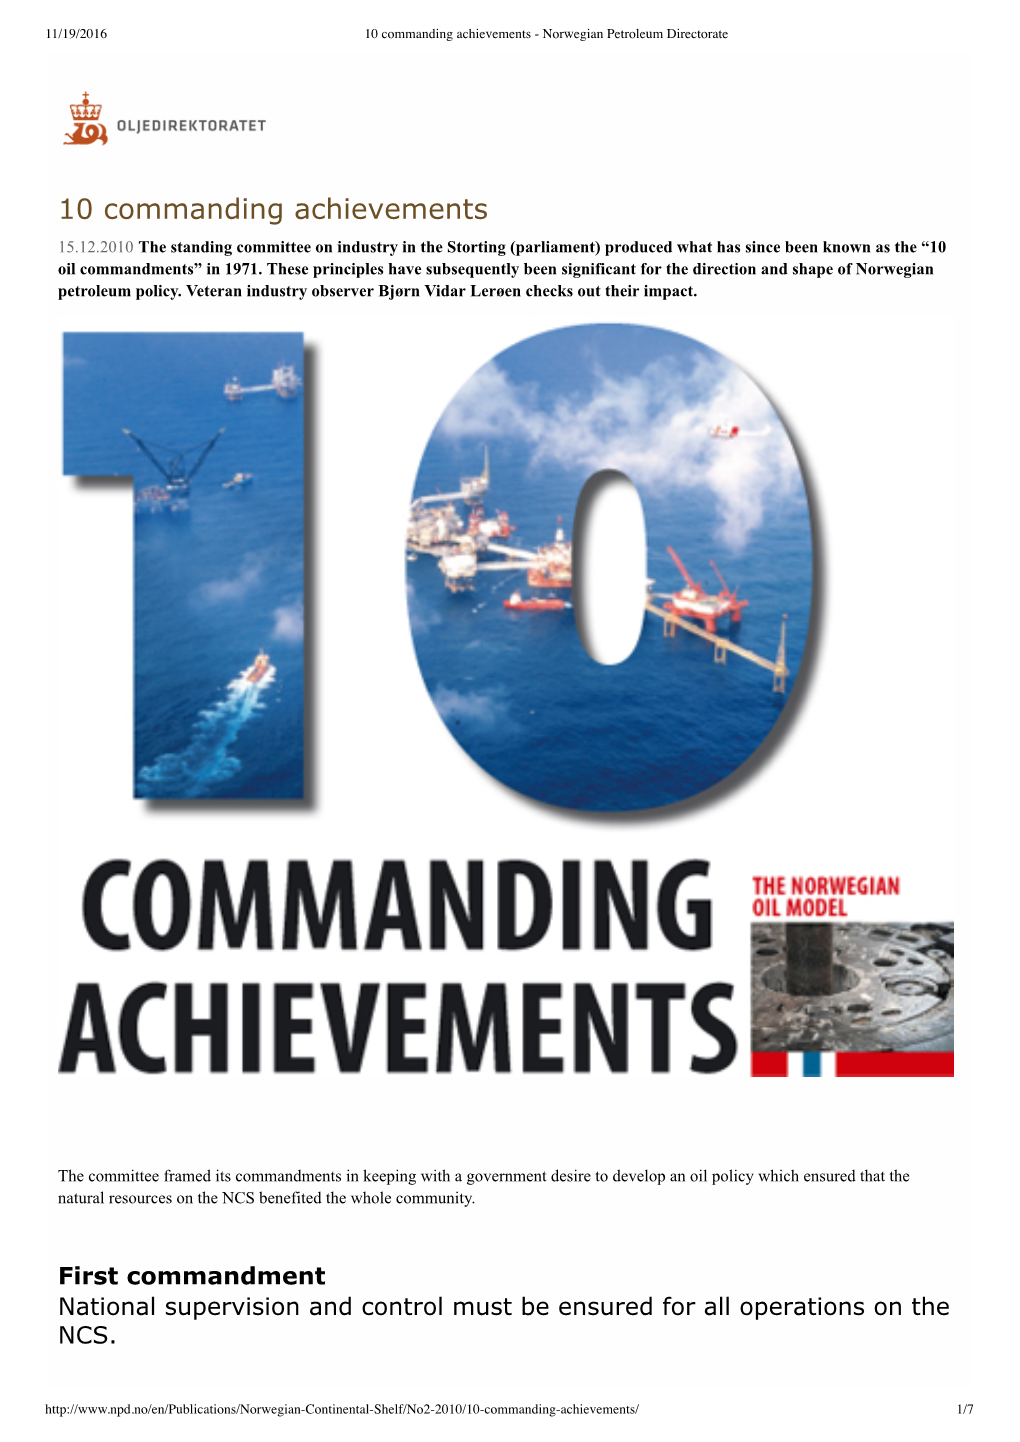 10 Commanding Achievements - Norwegian Petroleum Directorate